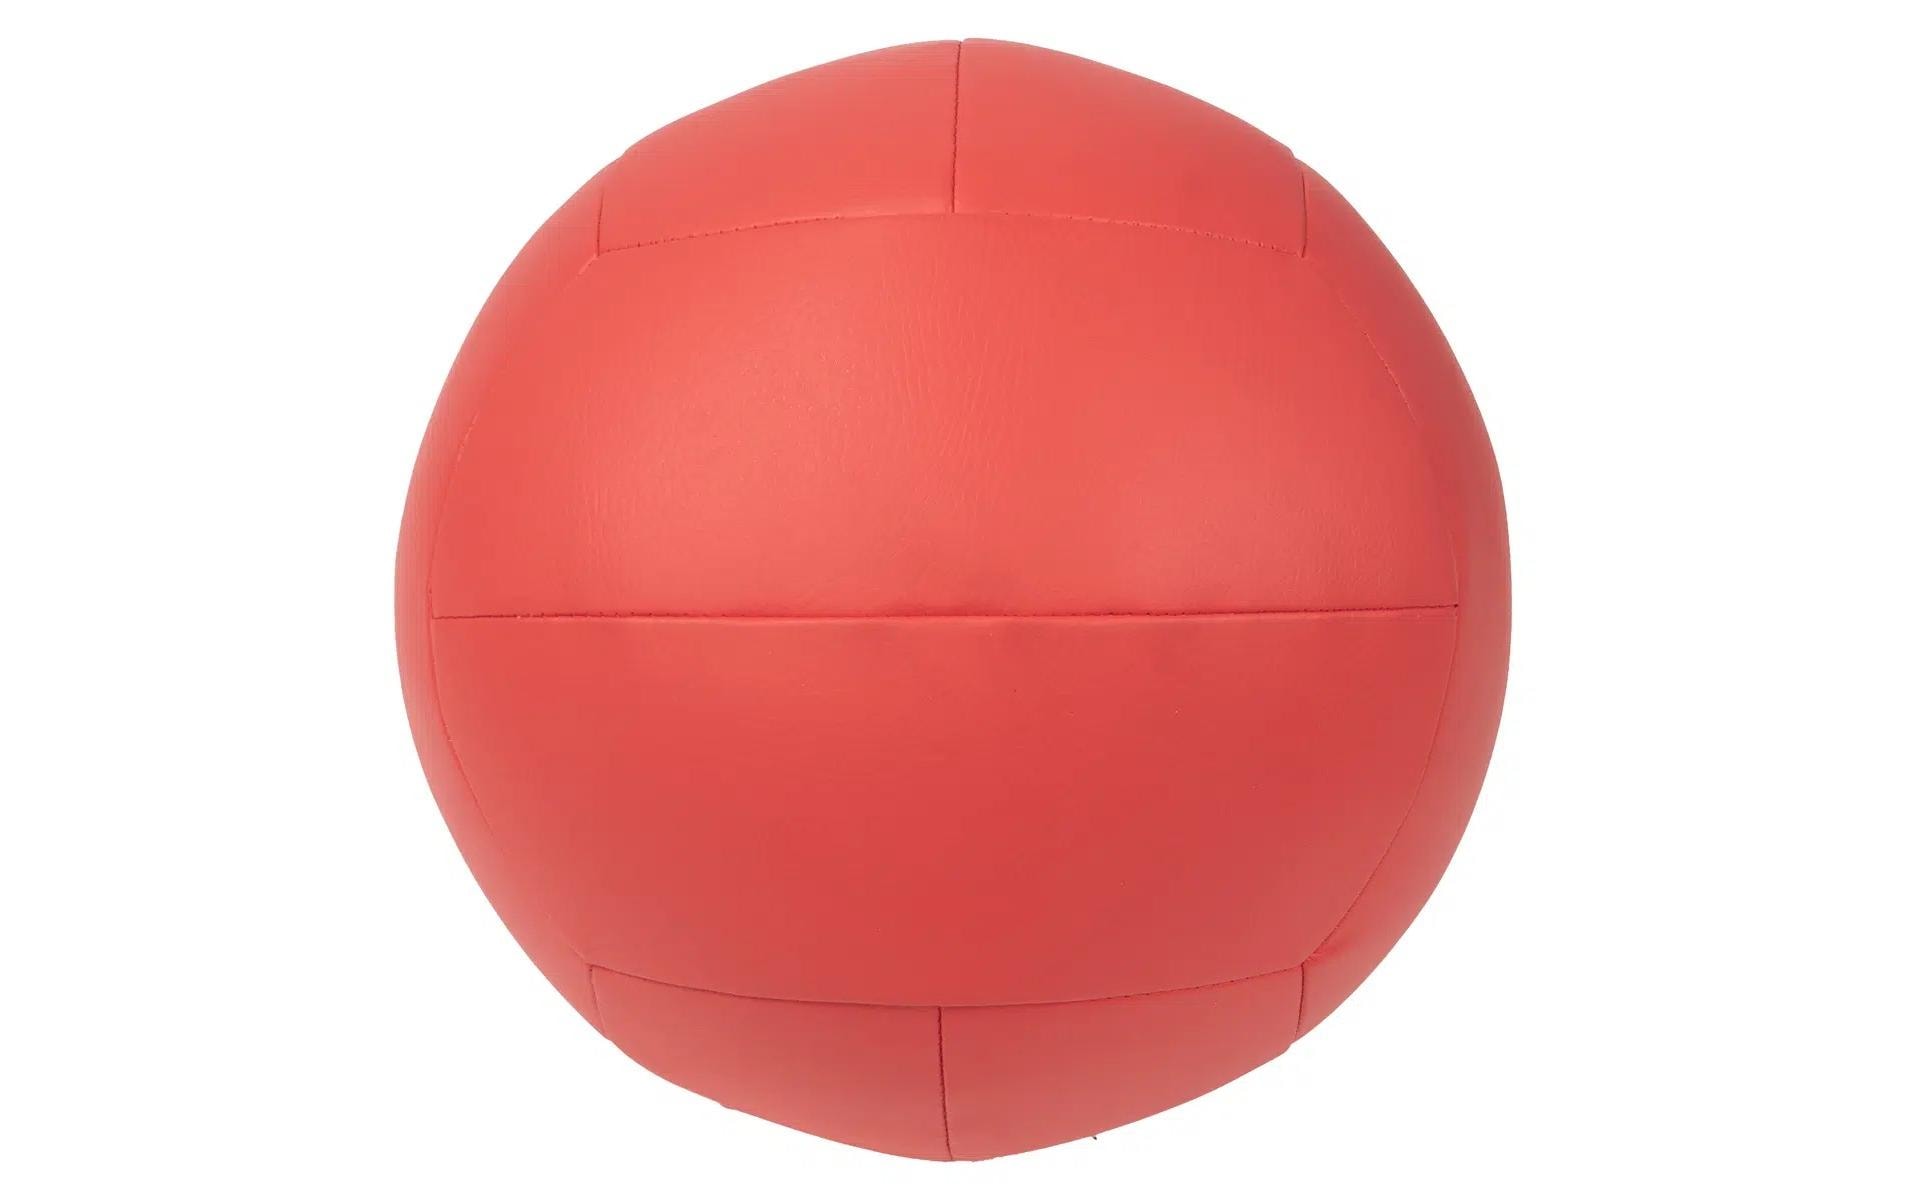 Gladiatorfit Medizinball Ultra-strapazierfähiger Wall Ball 1 kg